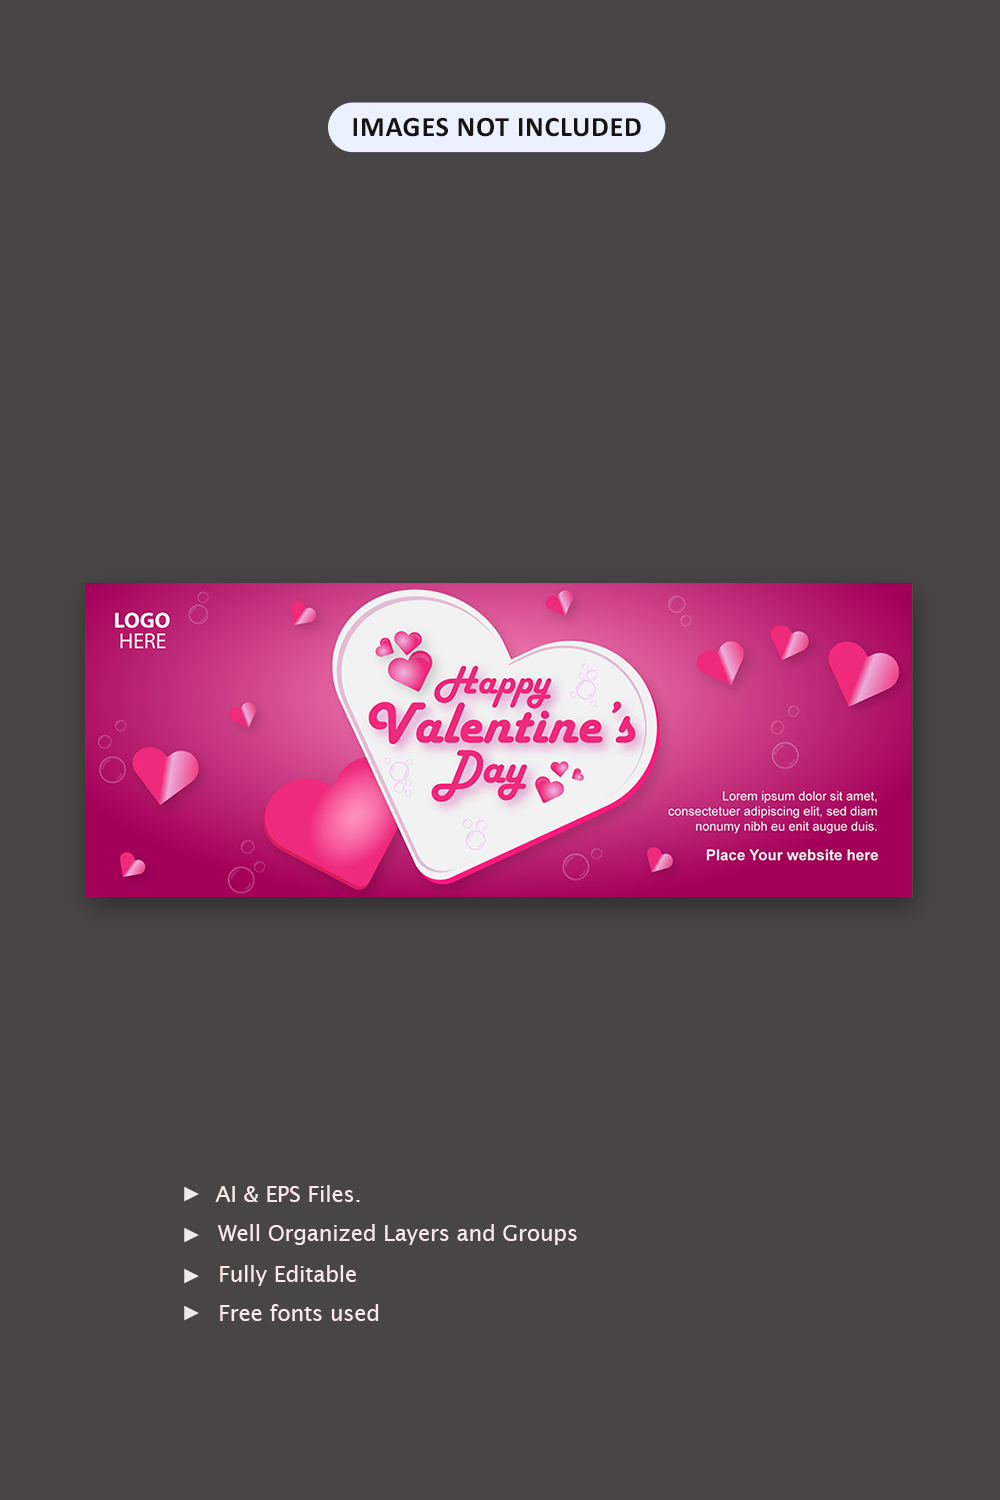 Valentine’s day social media cover banner illustration pinterest preview image.